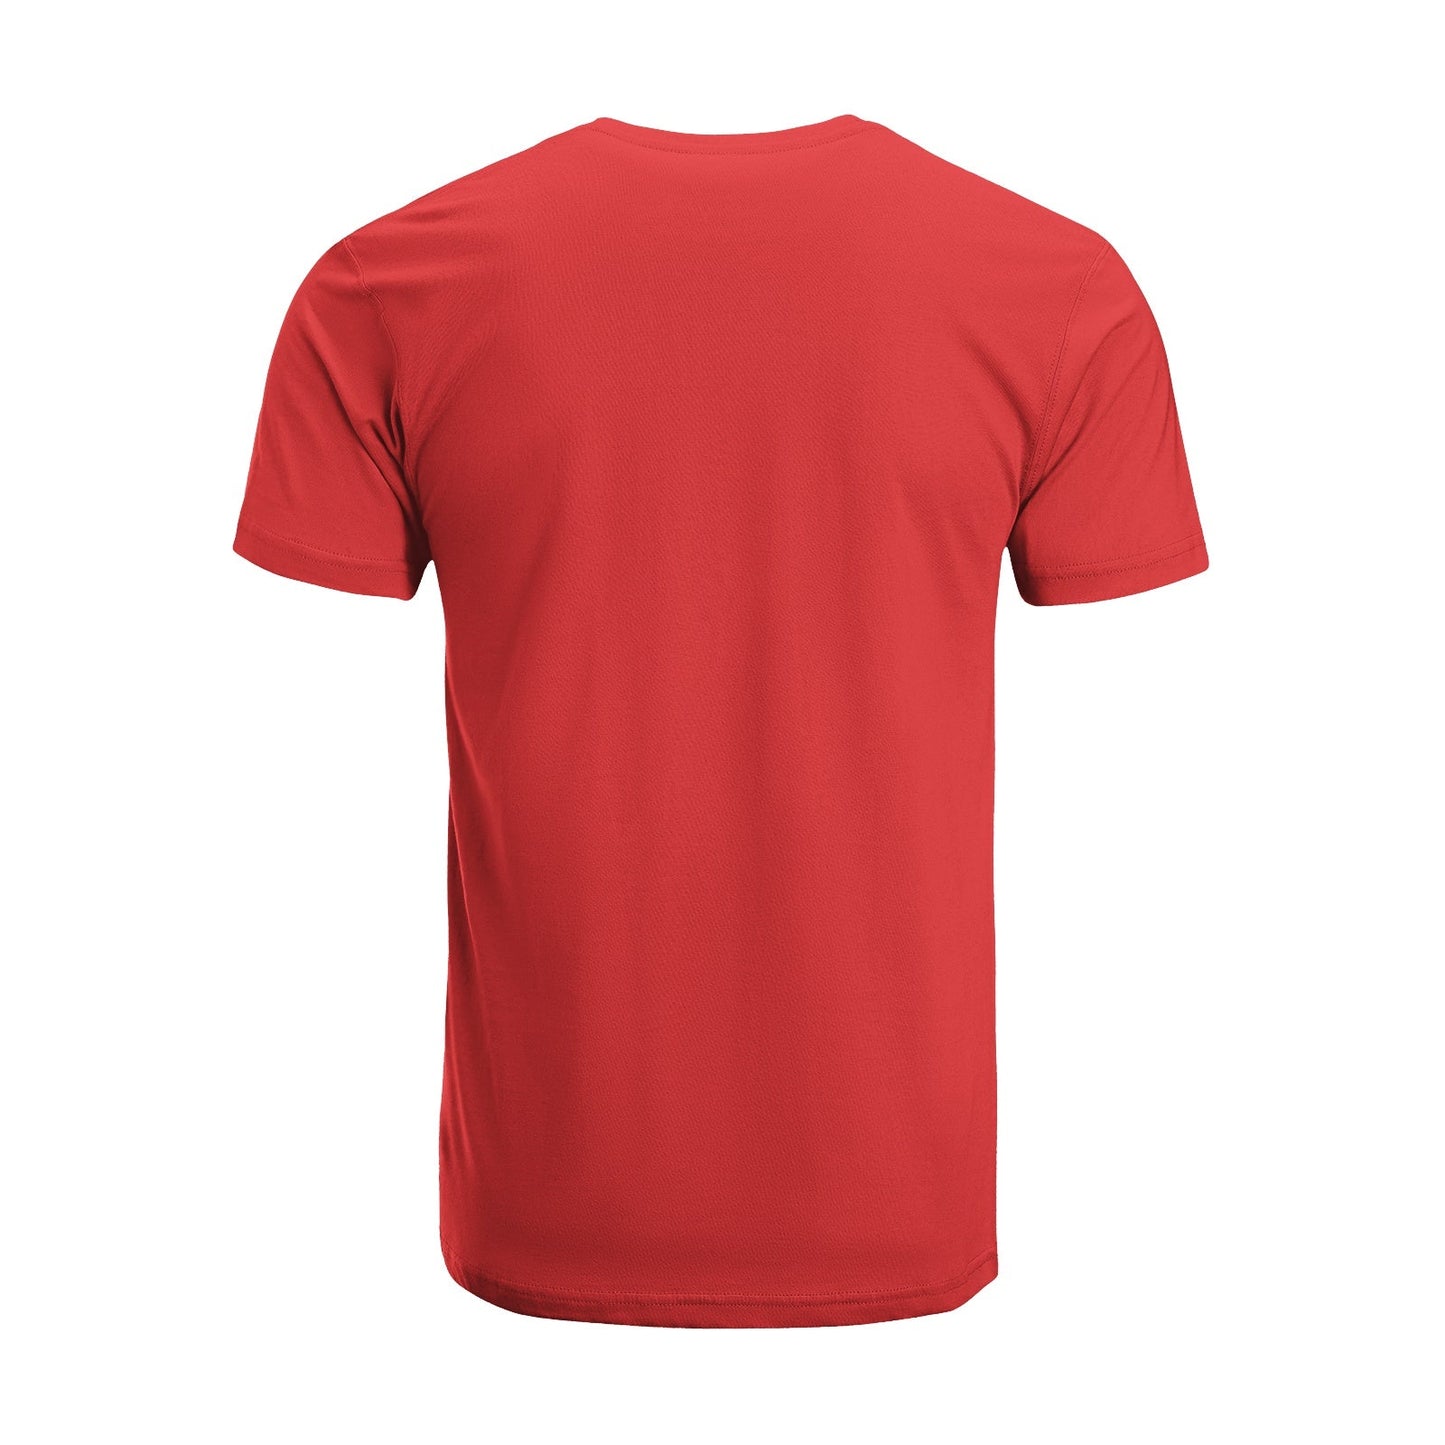 Unisex Short Sleeve Crew Neck Cotton Jersey T-Shirt VEGAN 06